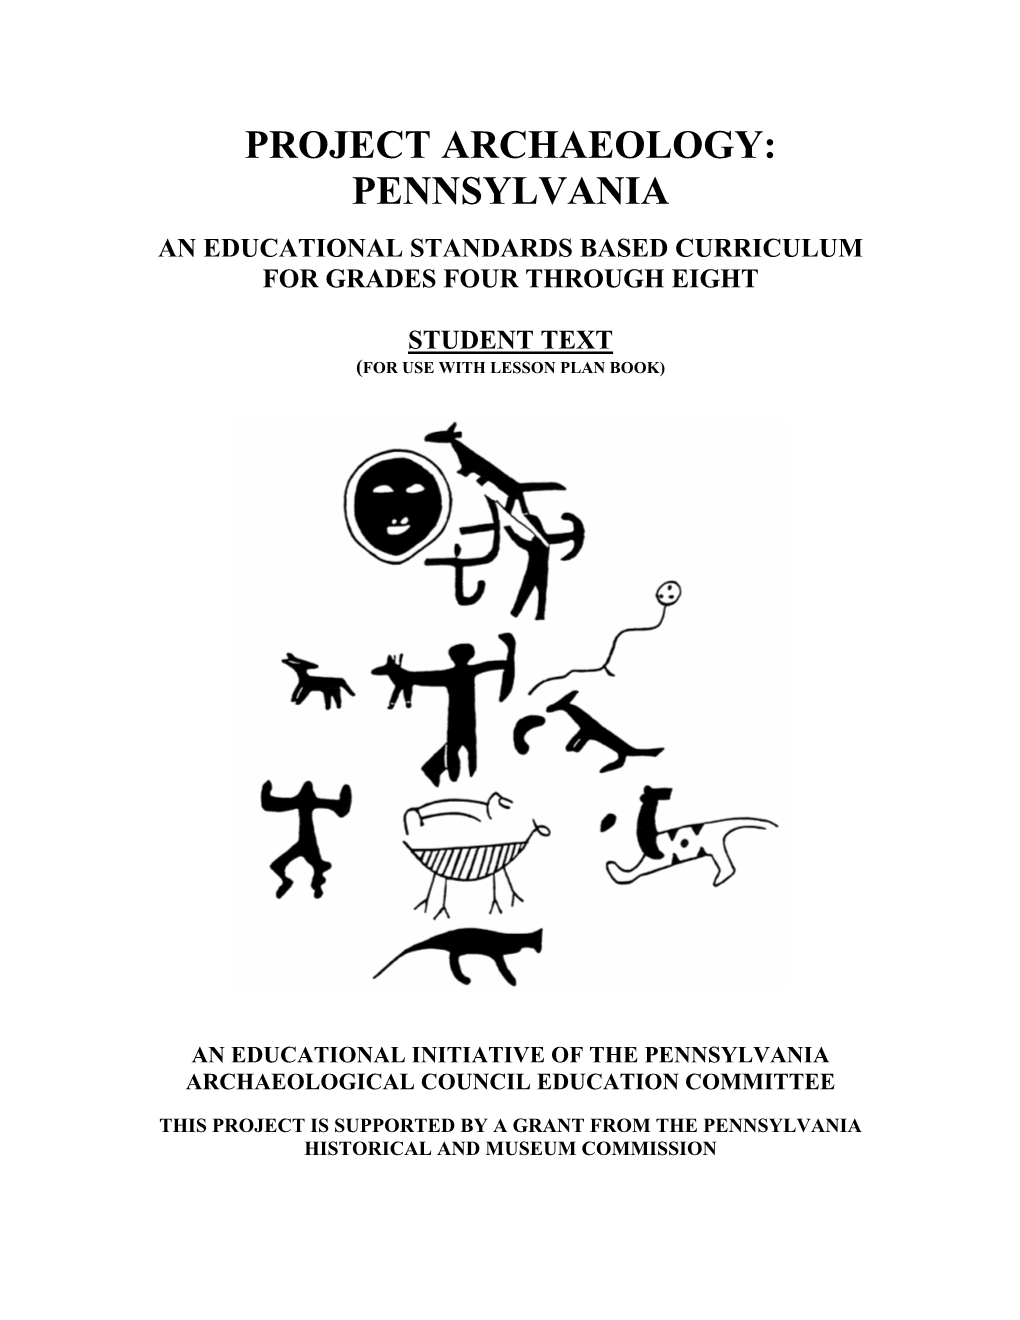 Project Archaeology: Pennsylvania